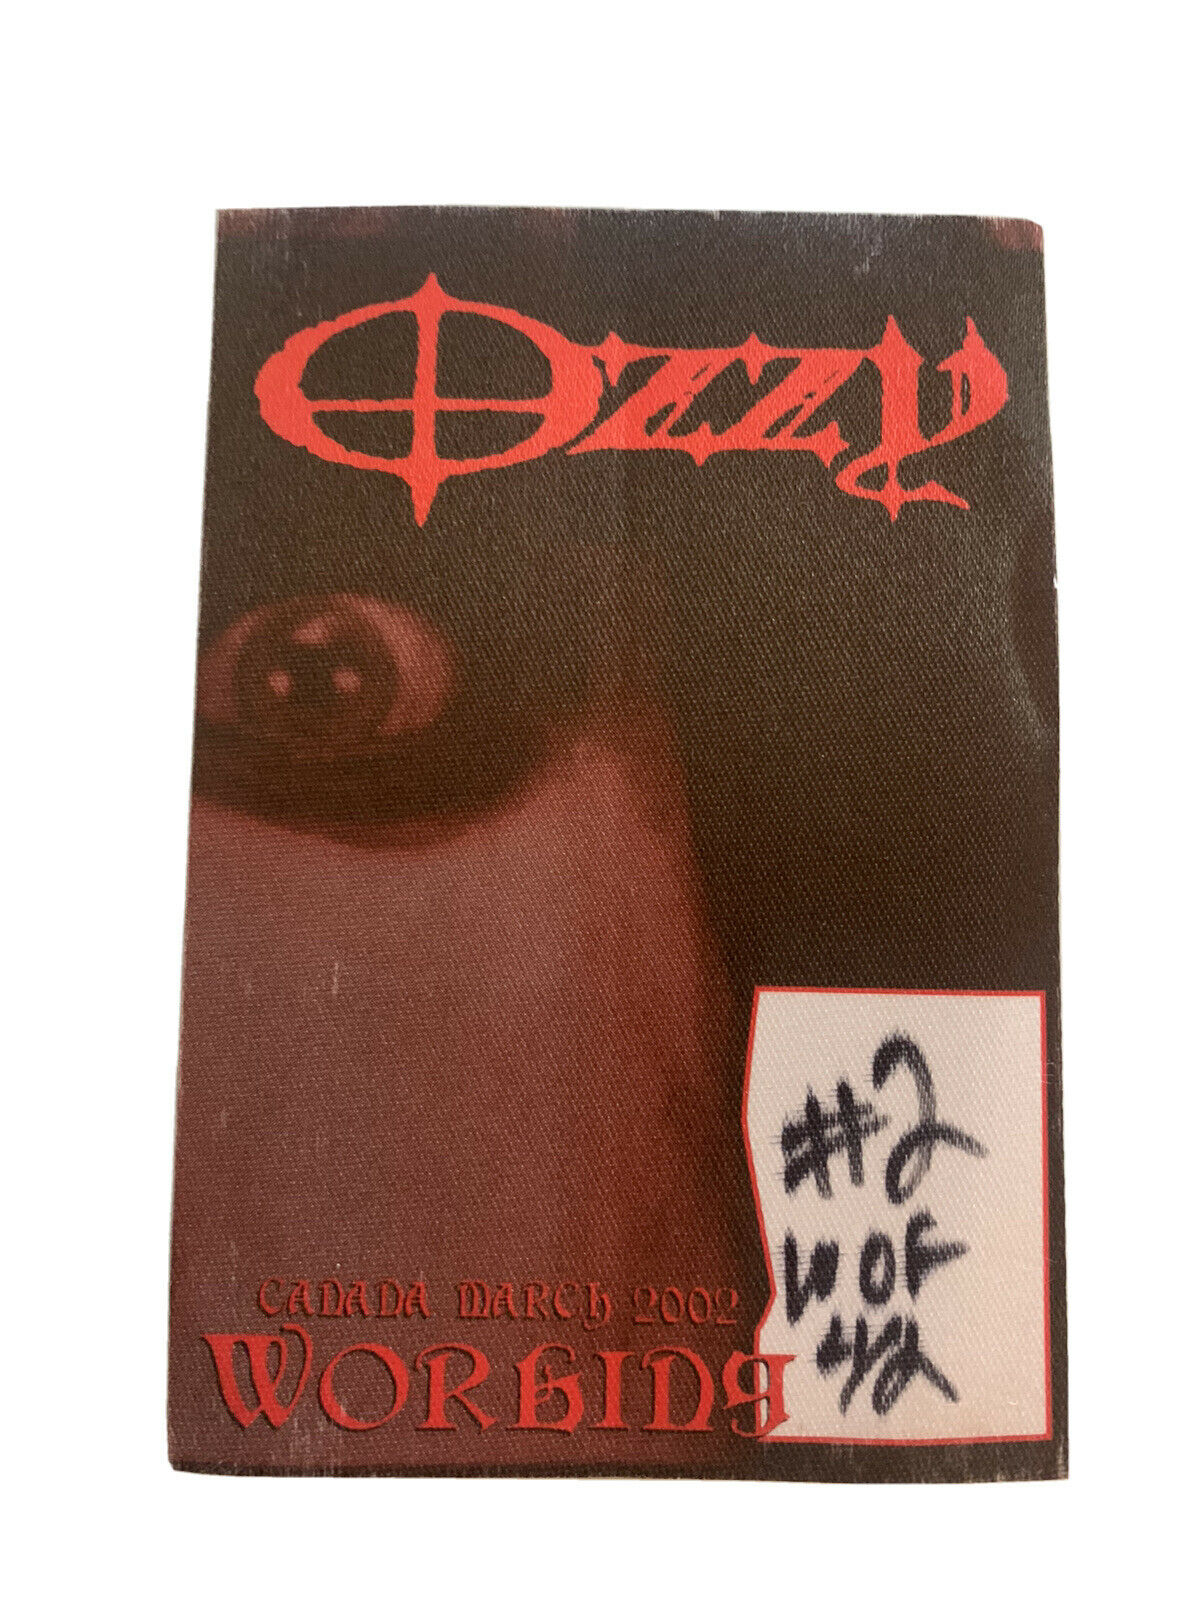 Ozzy Osbourne Ozzfest 2002 Canada Concert Tour Backstage Pass 100% Real #2